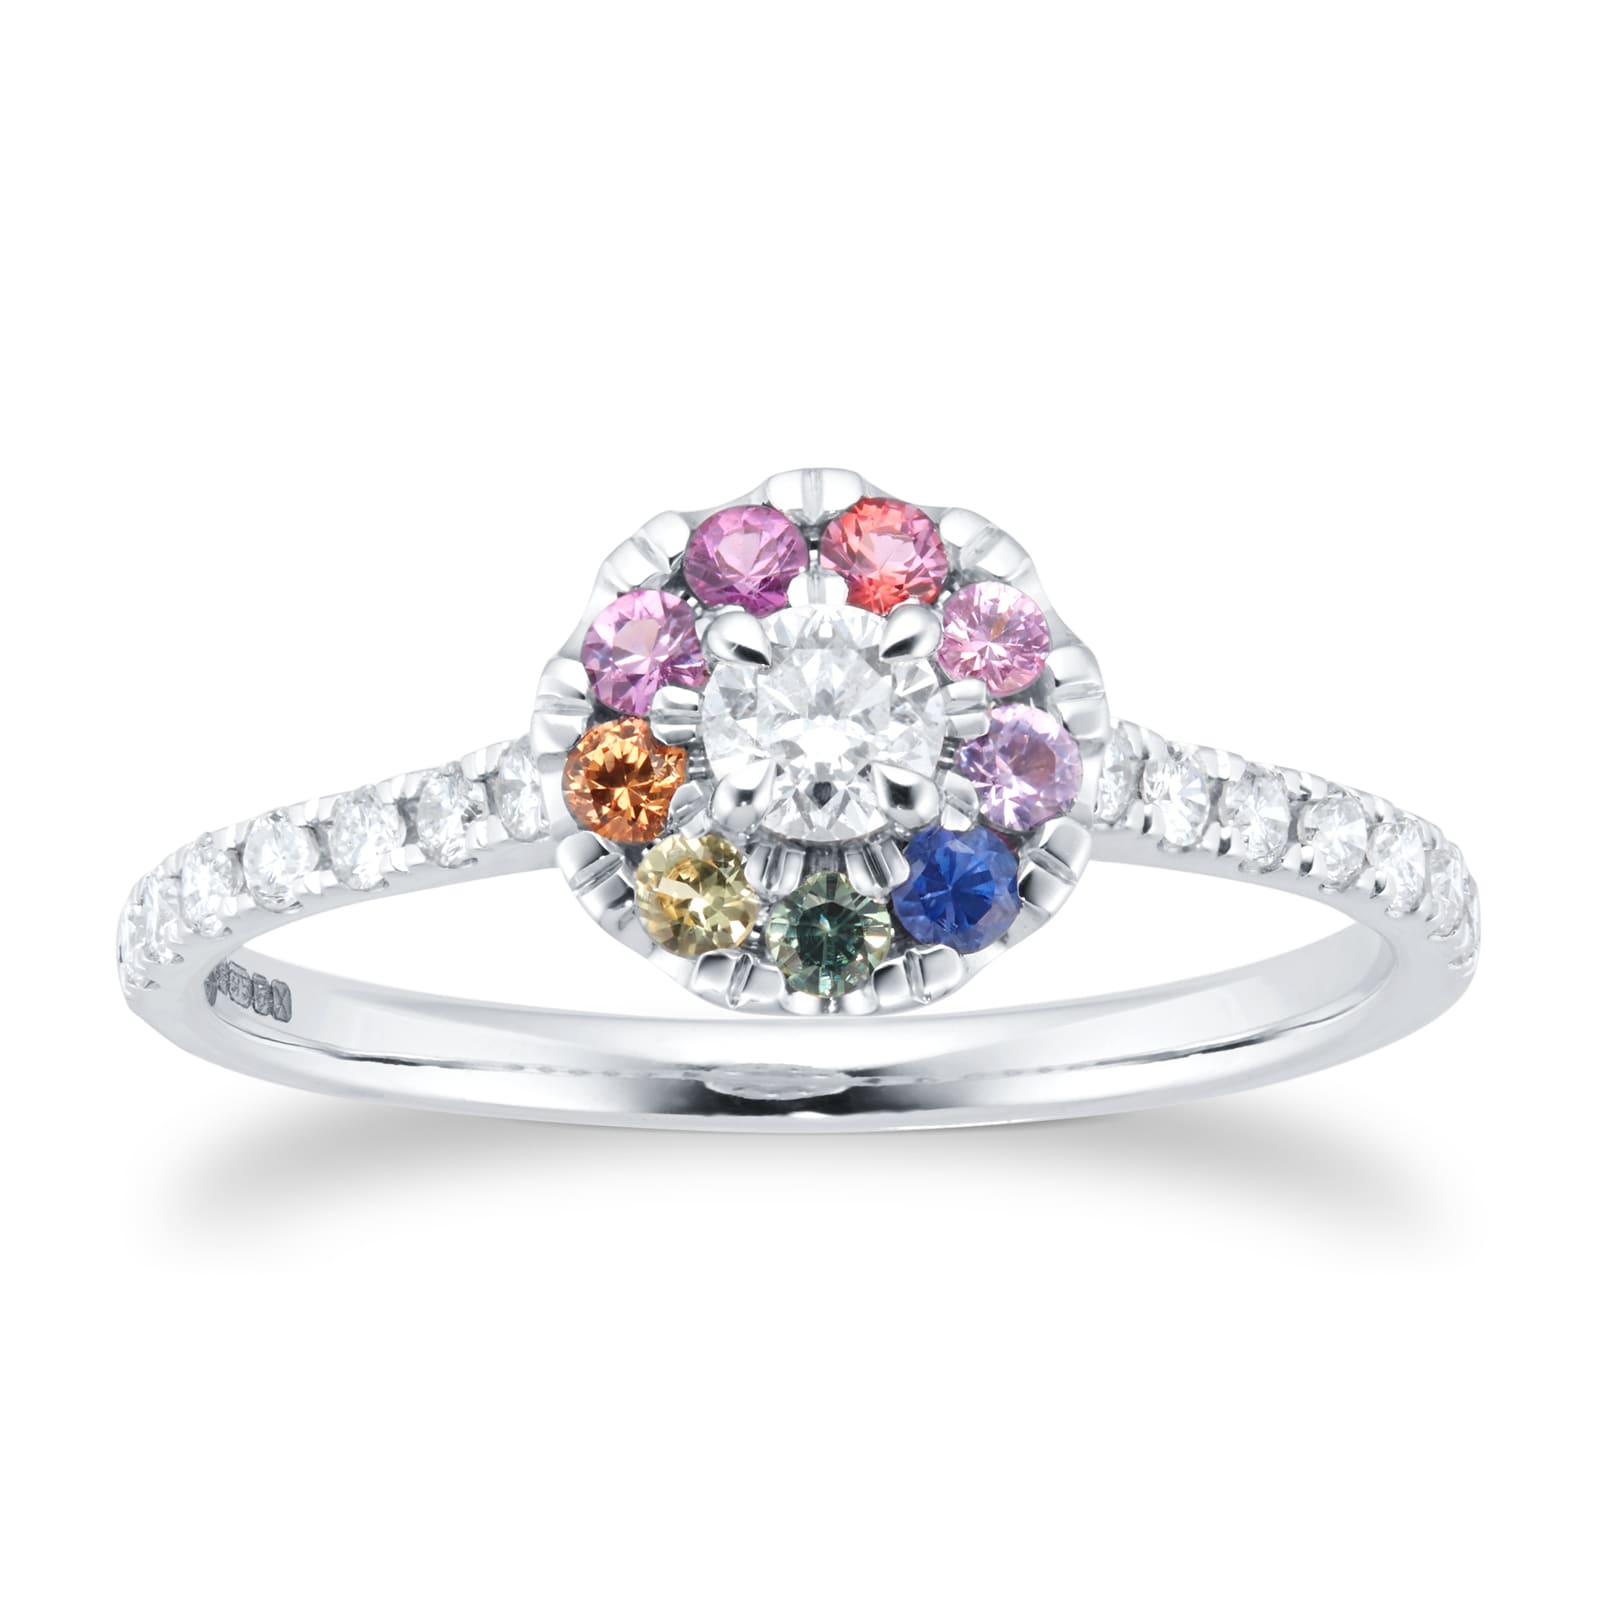 9ct White Gold Diamond & Rainbow Sapphire Halo Ring - Ring Size L.5